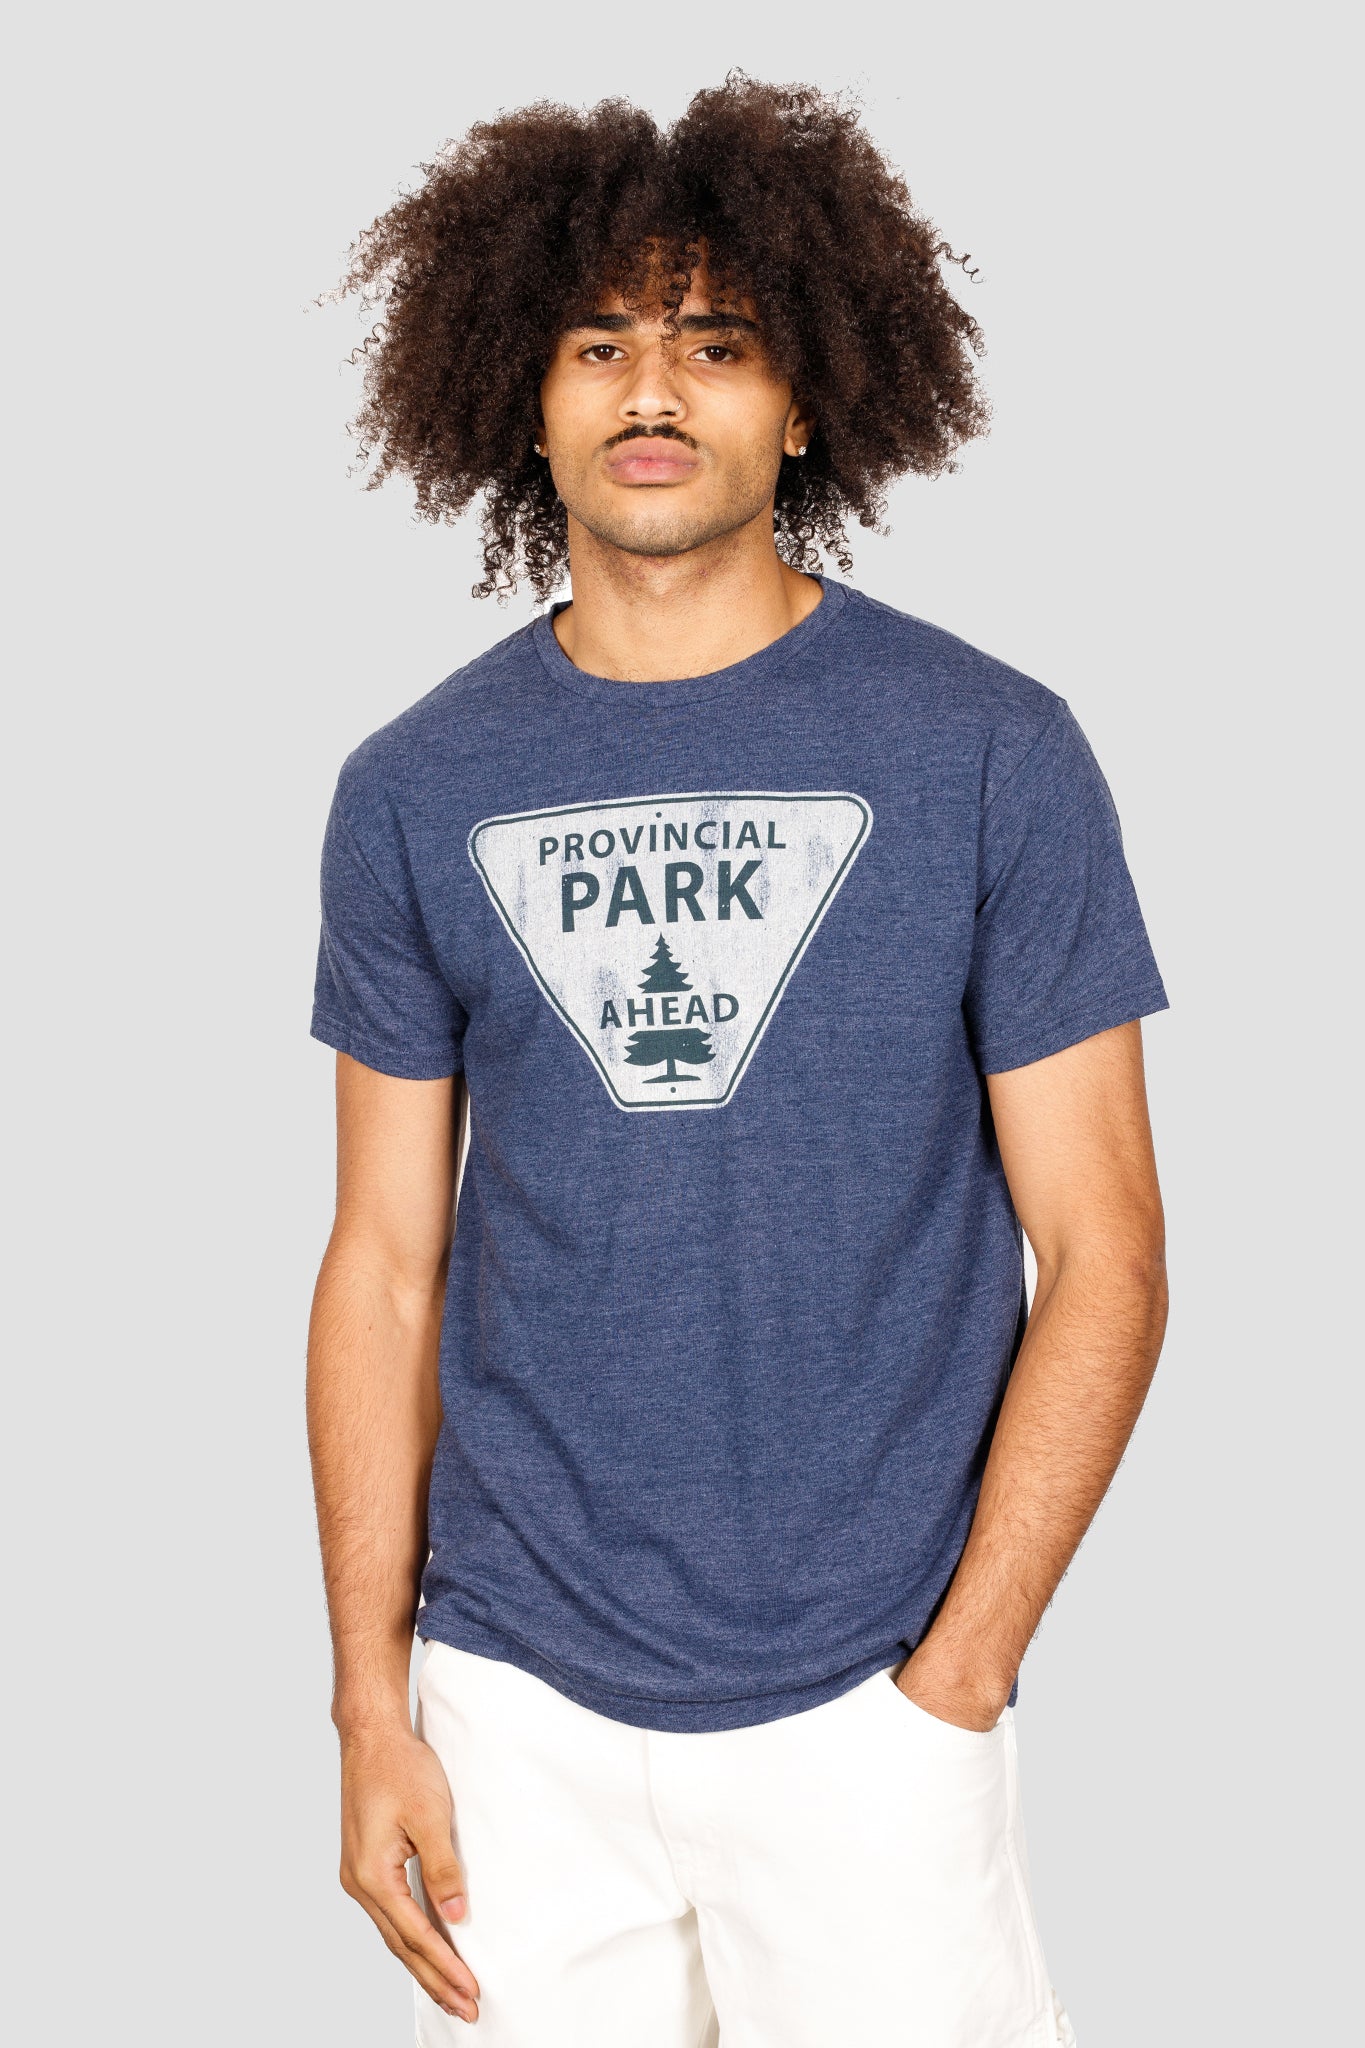 Provincial Park Ahead Tee T-Shirts Retro Brand   